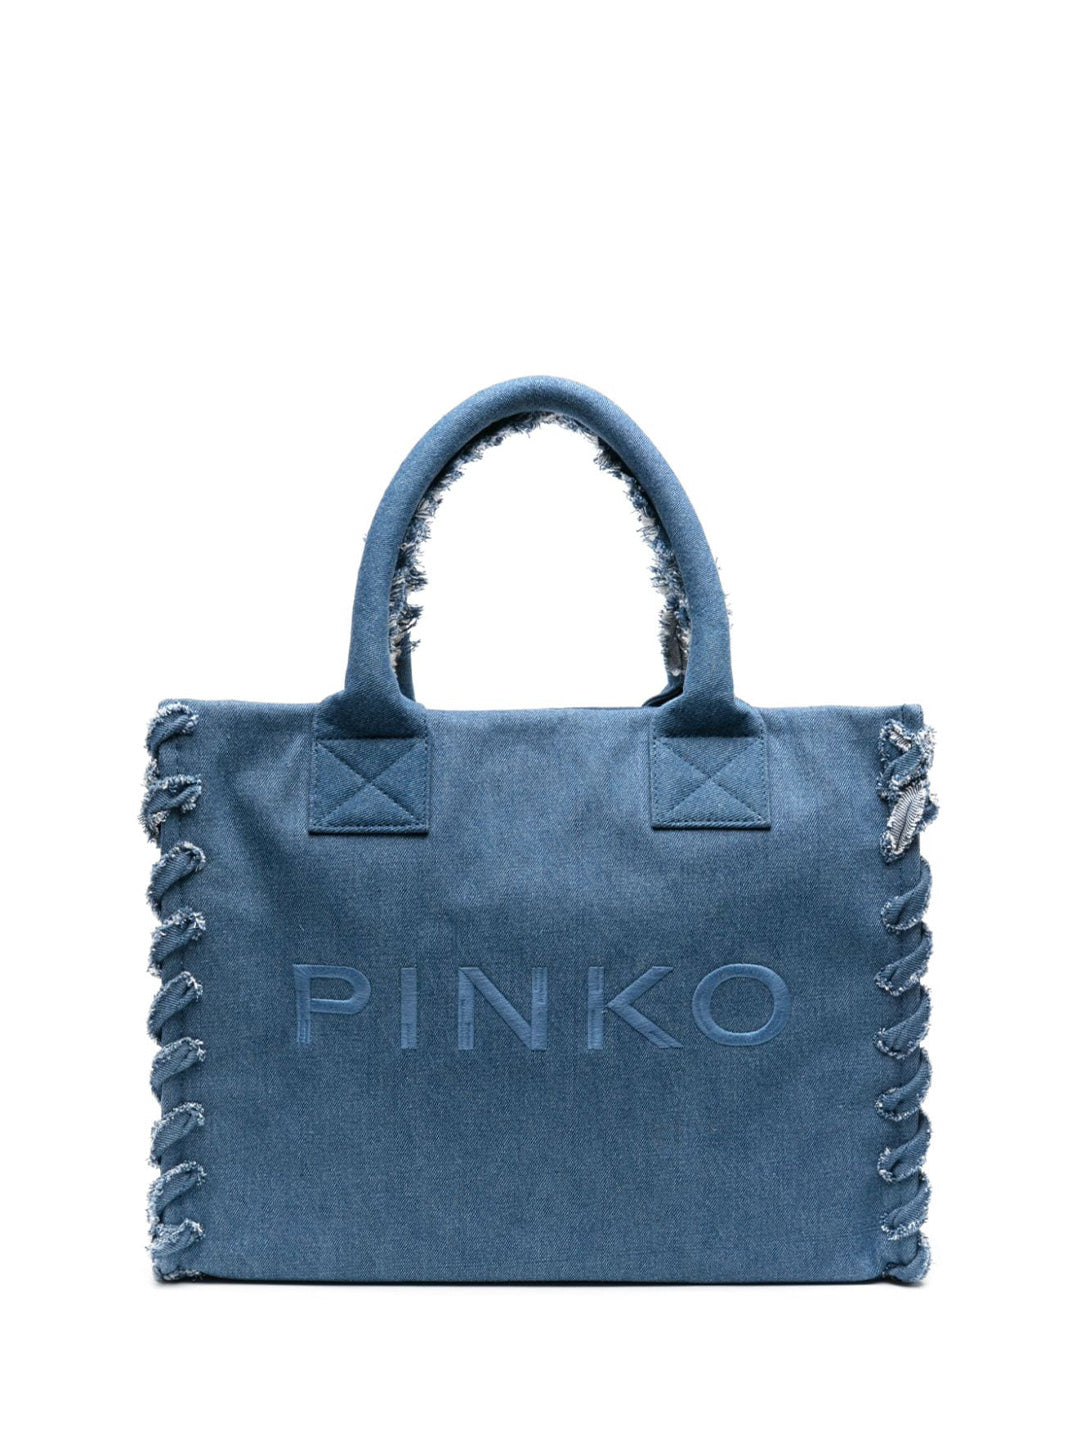 Pinko Beach Shopping borsa blu in denim